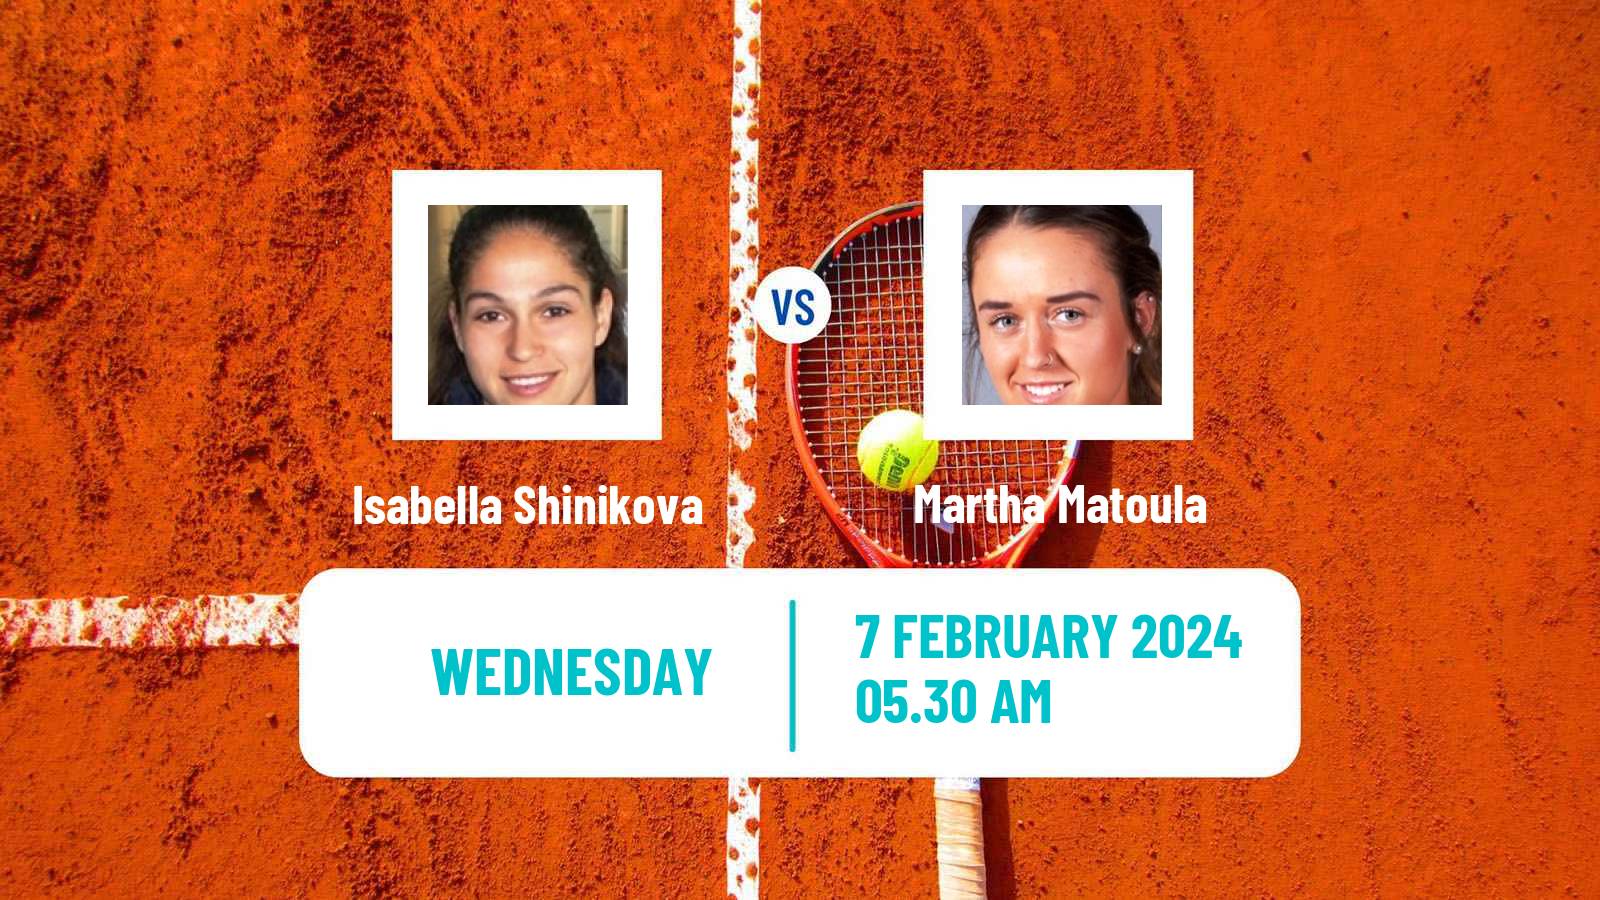 Tennis ITF W35 Antalya 2 Women Isabella Shinikova - Martha Matoula